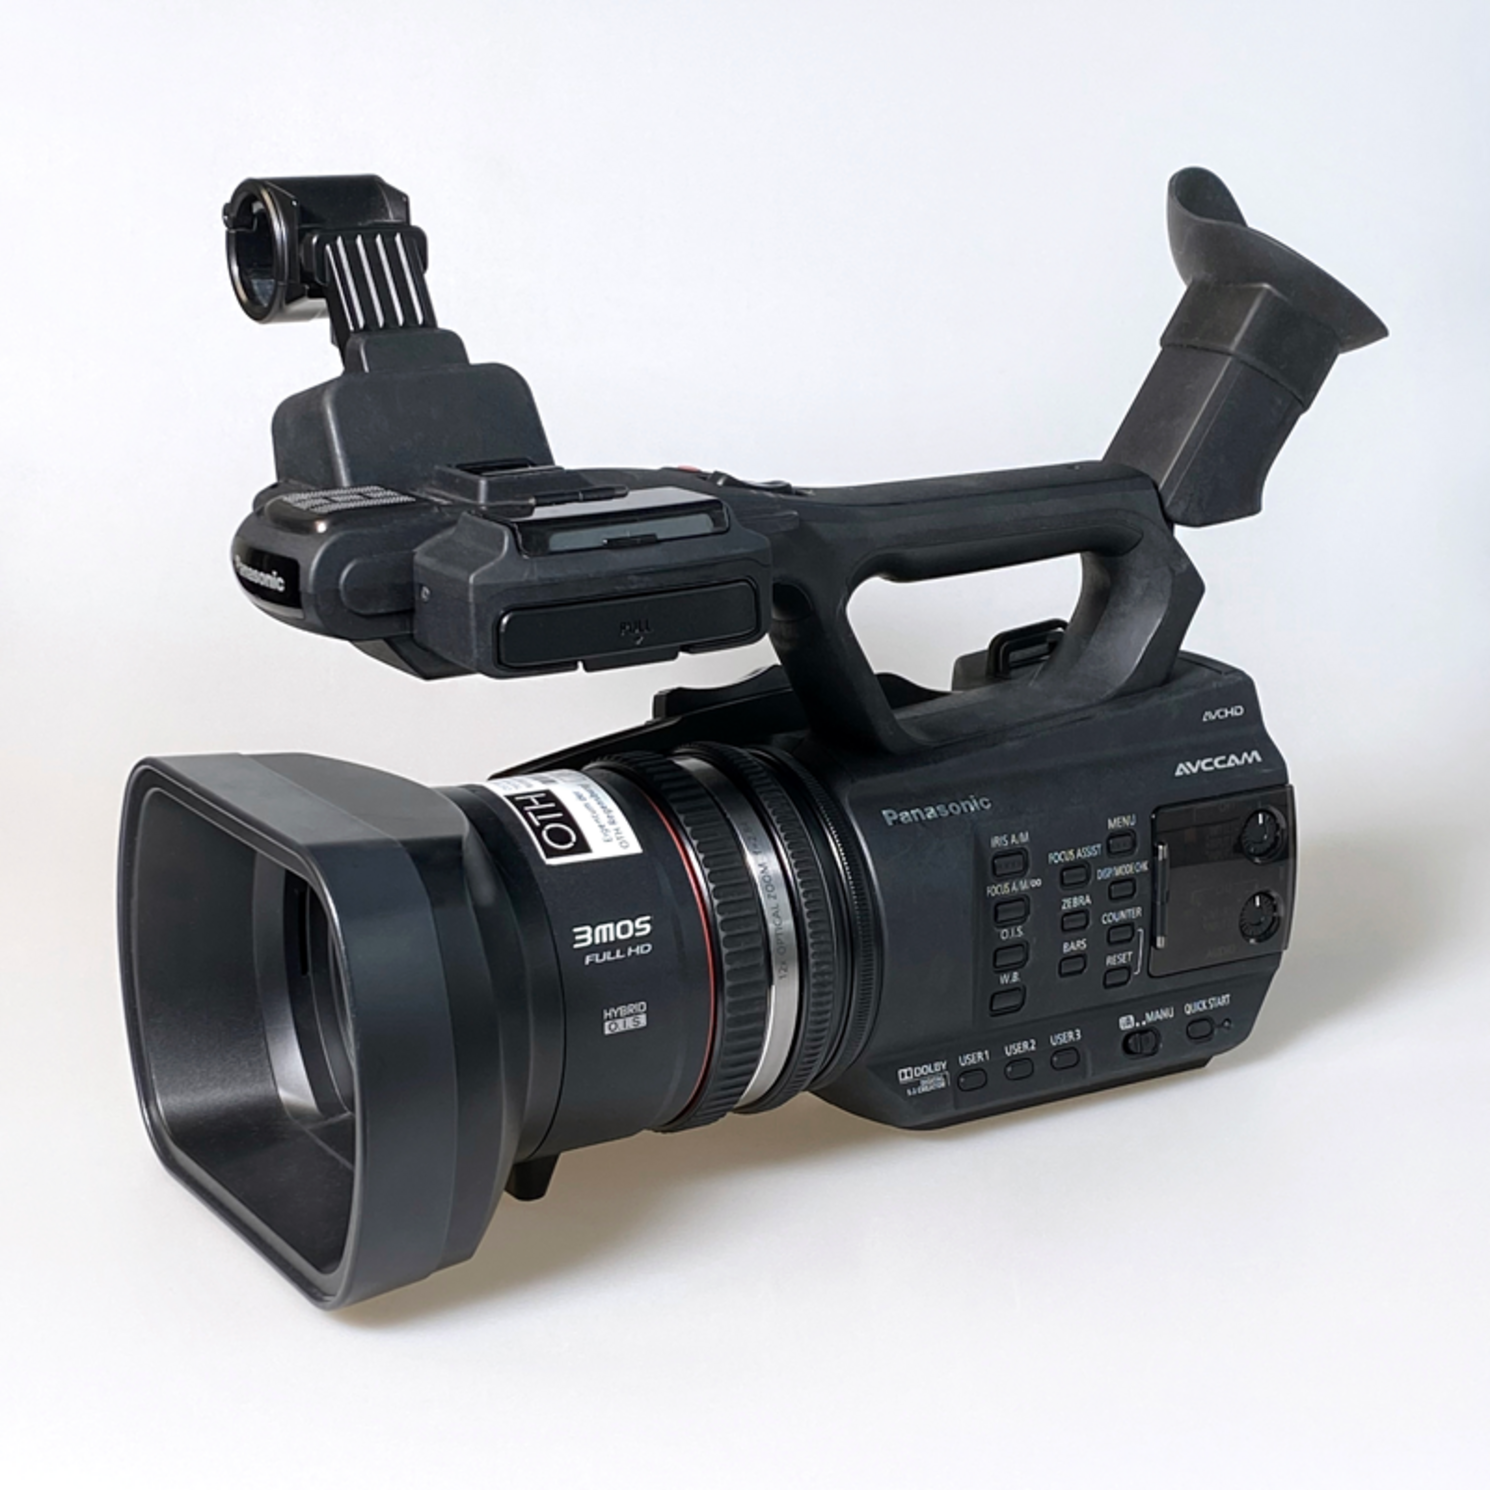 Panasonic 3mos Videokamera